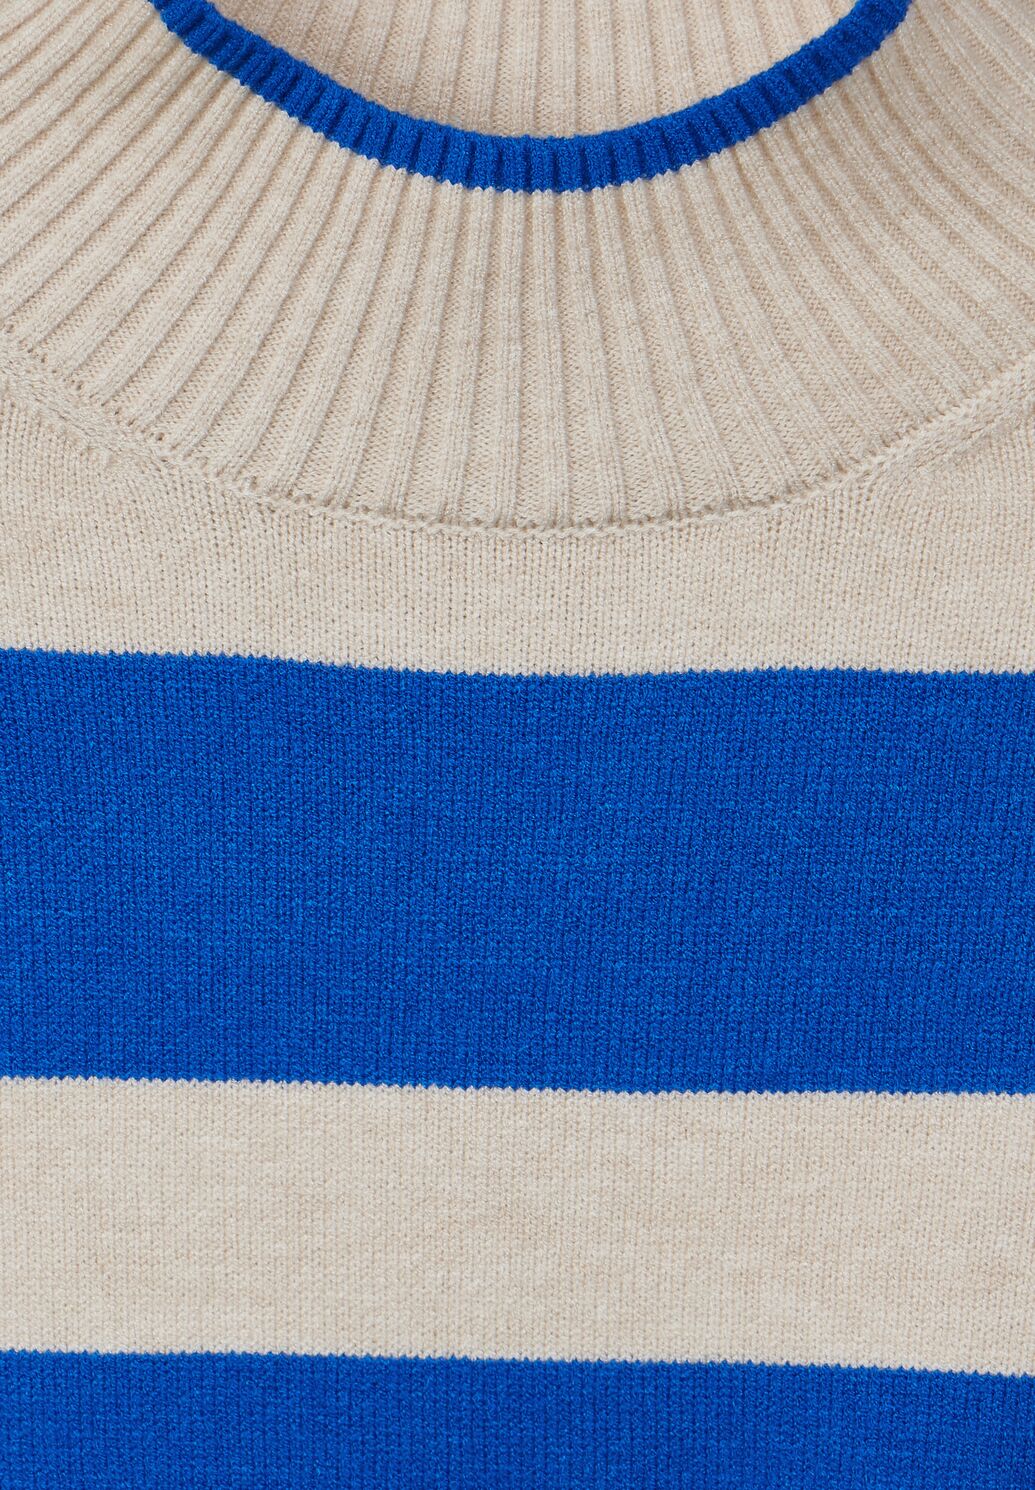 Street One - Striped Sweater - 302633